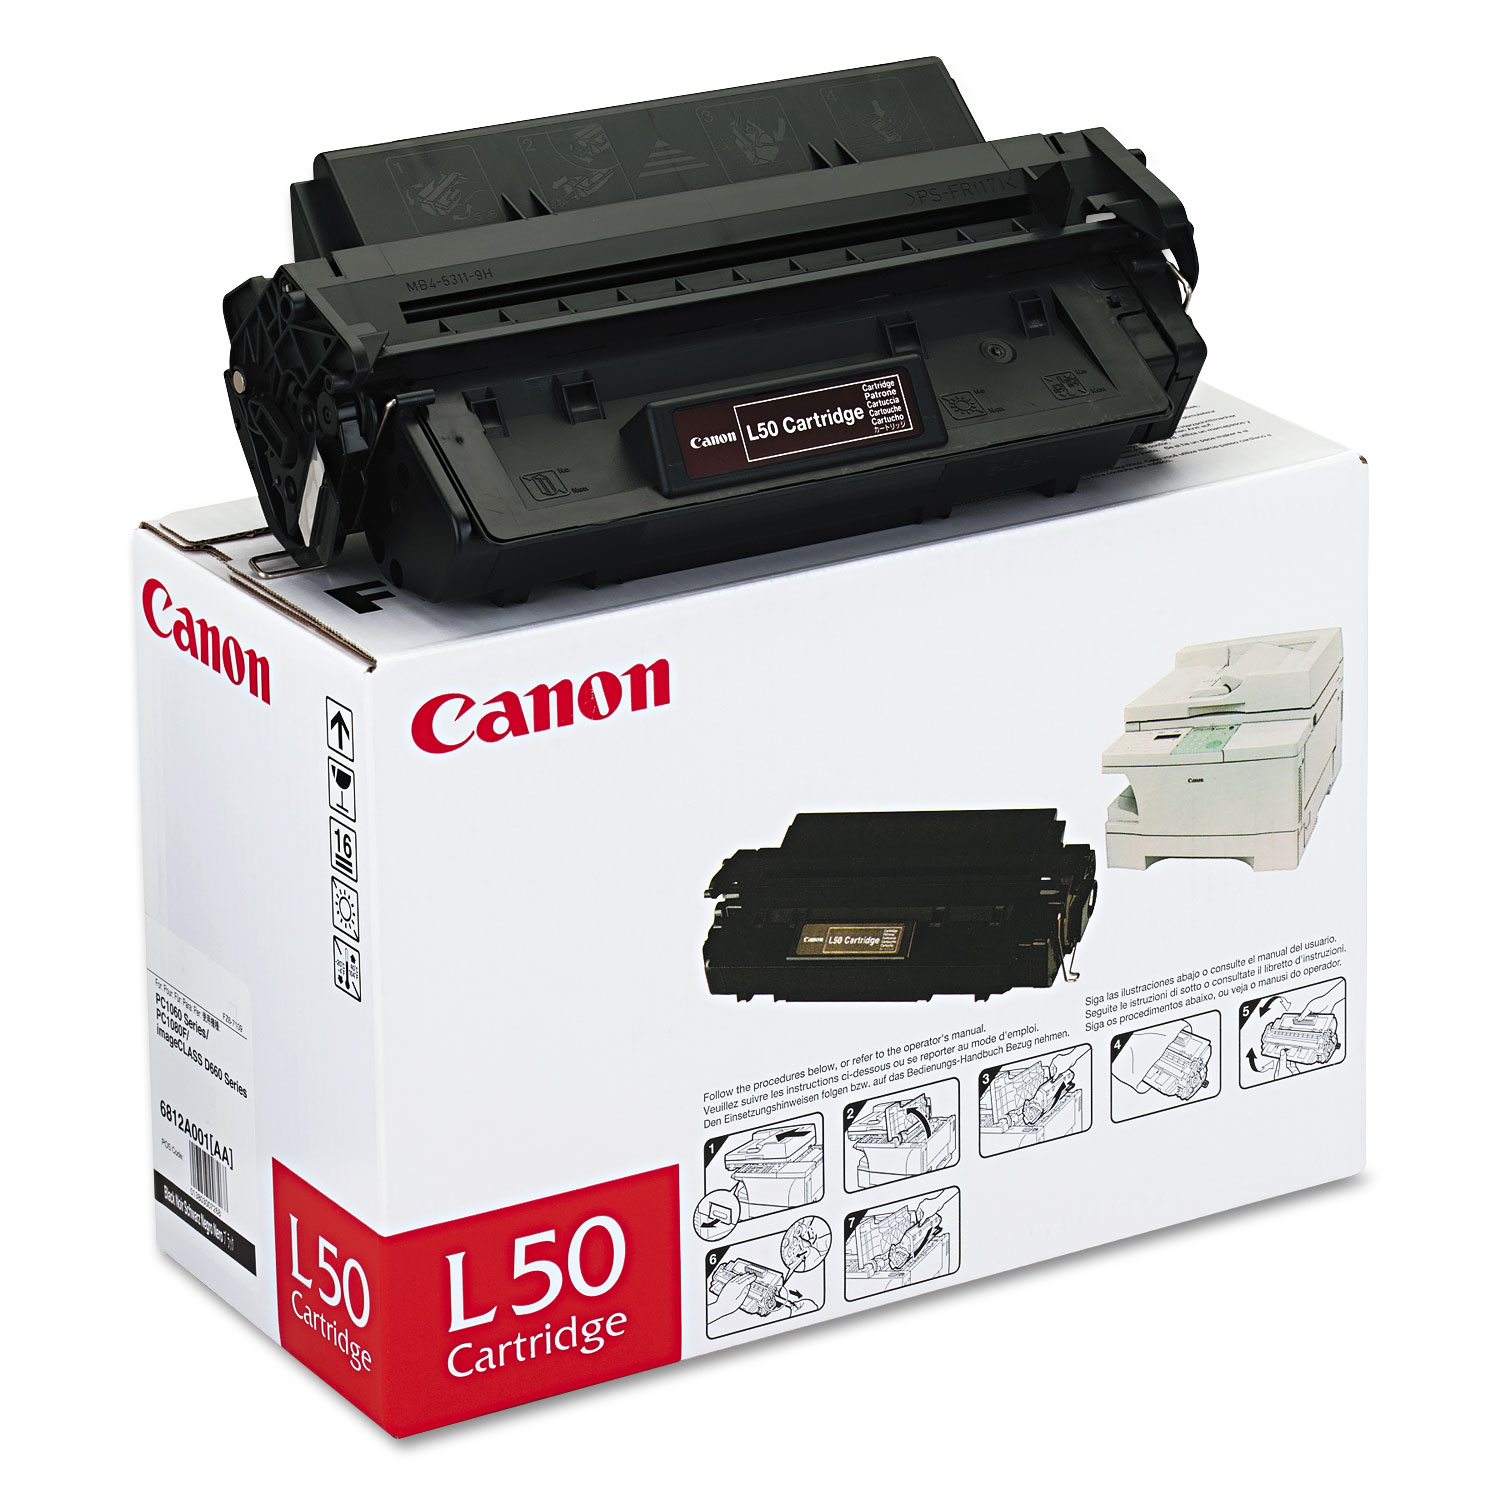  Canon 6812A001 L50 (L50) Toner, 5000 Page-Yield, Black (CNML50) 